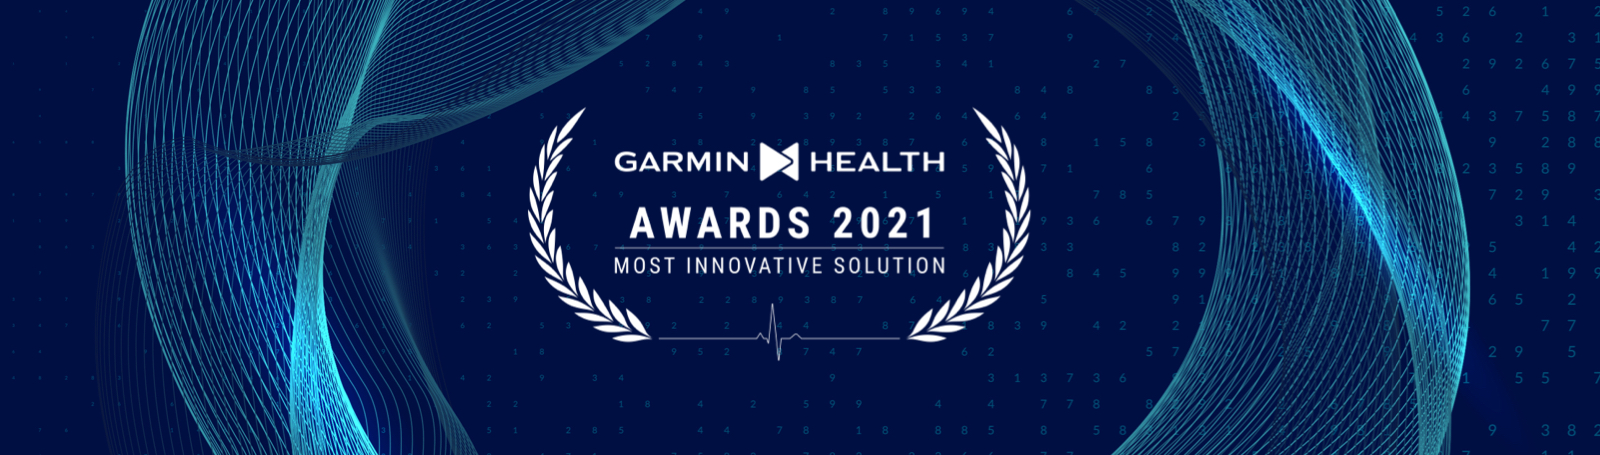 [20210610] Global call for entries announced for 2021 Garmin Health Awards